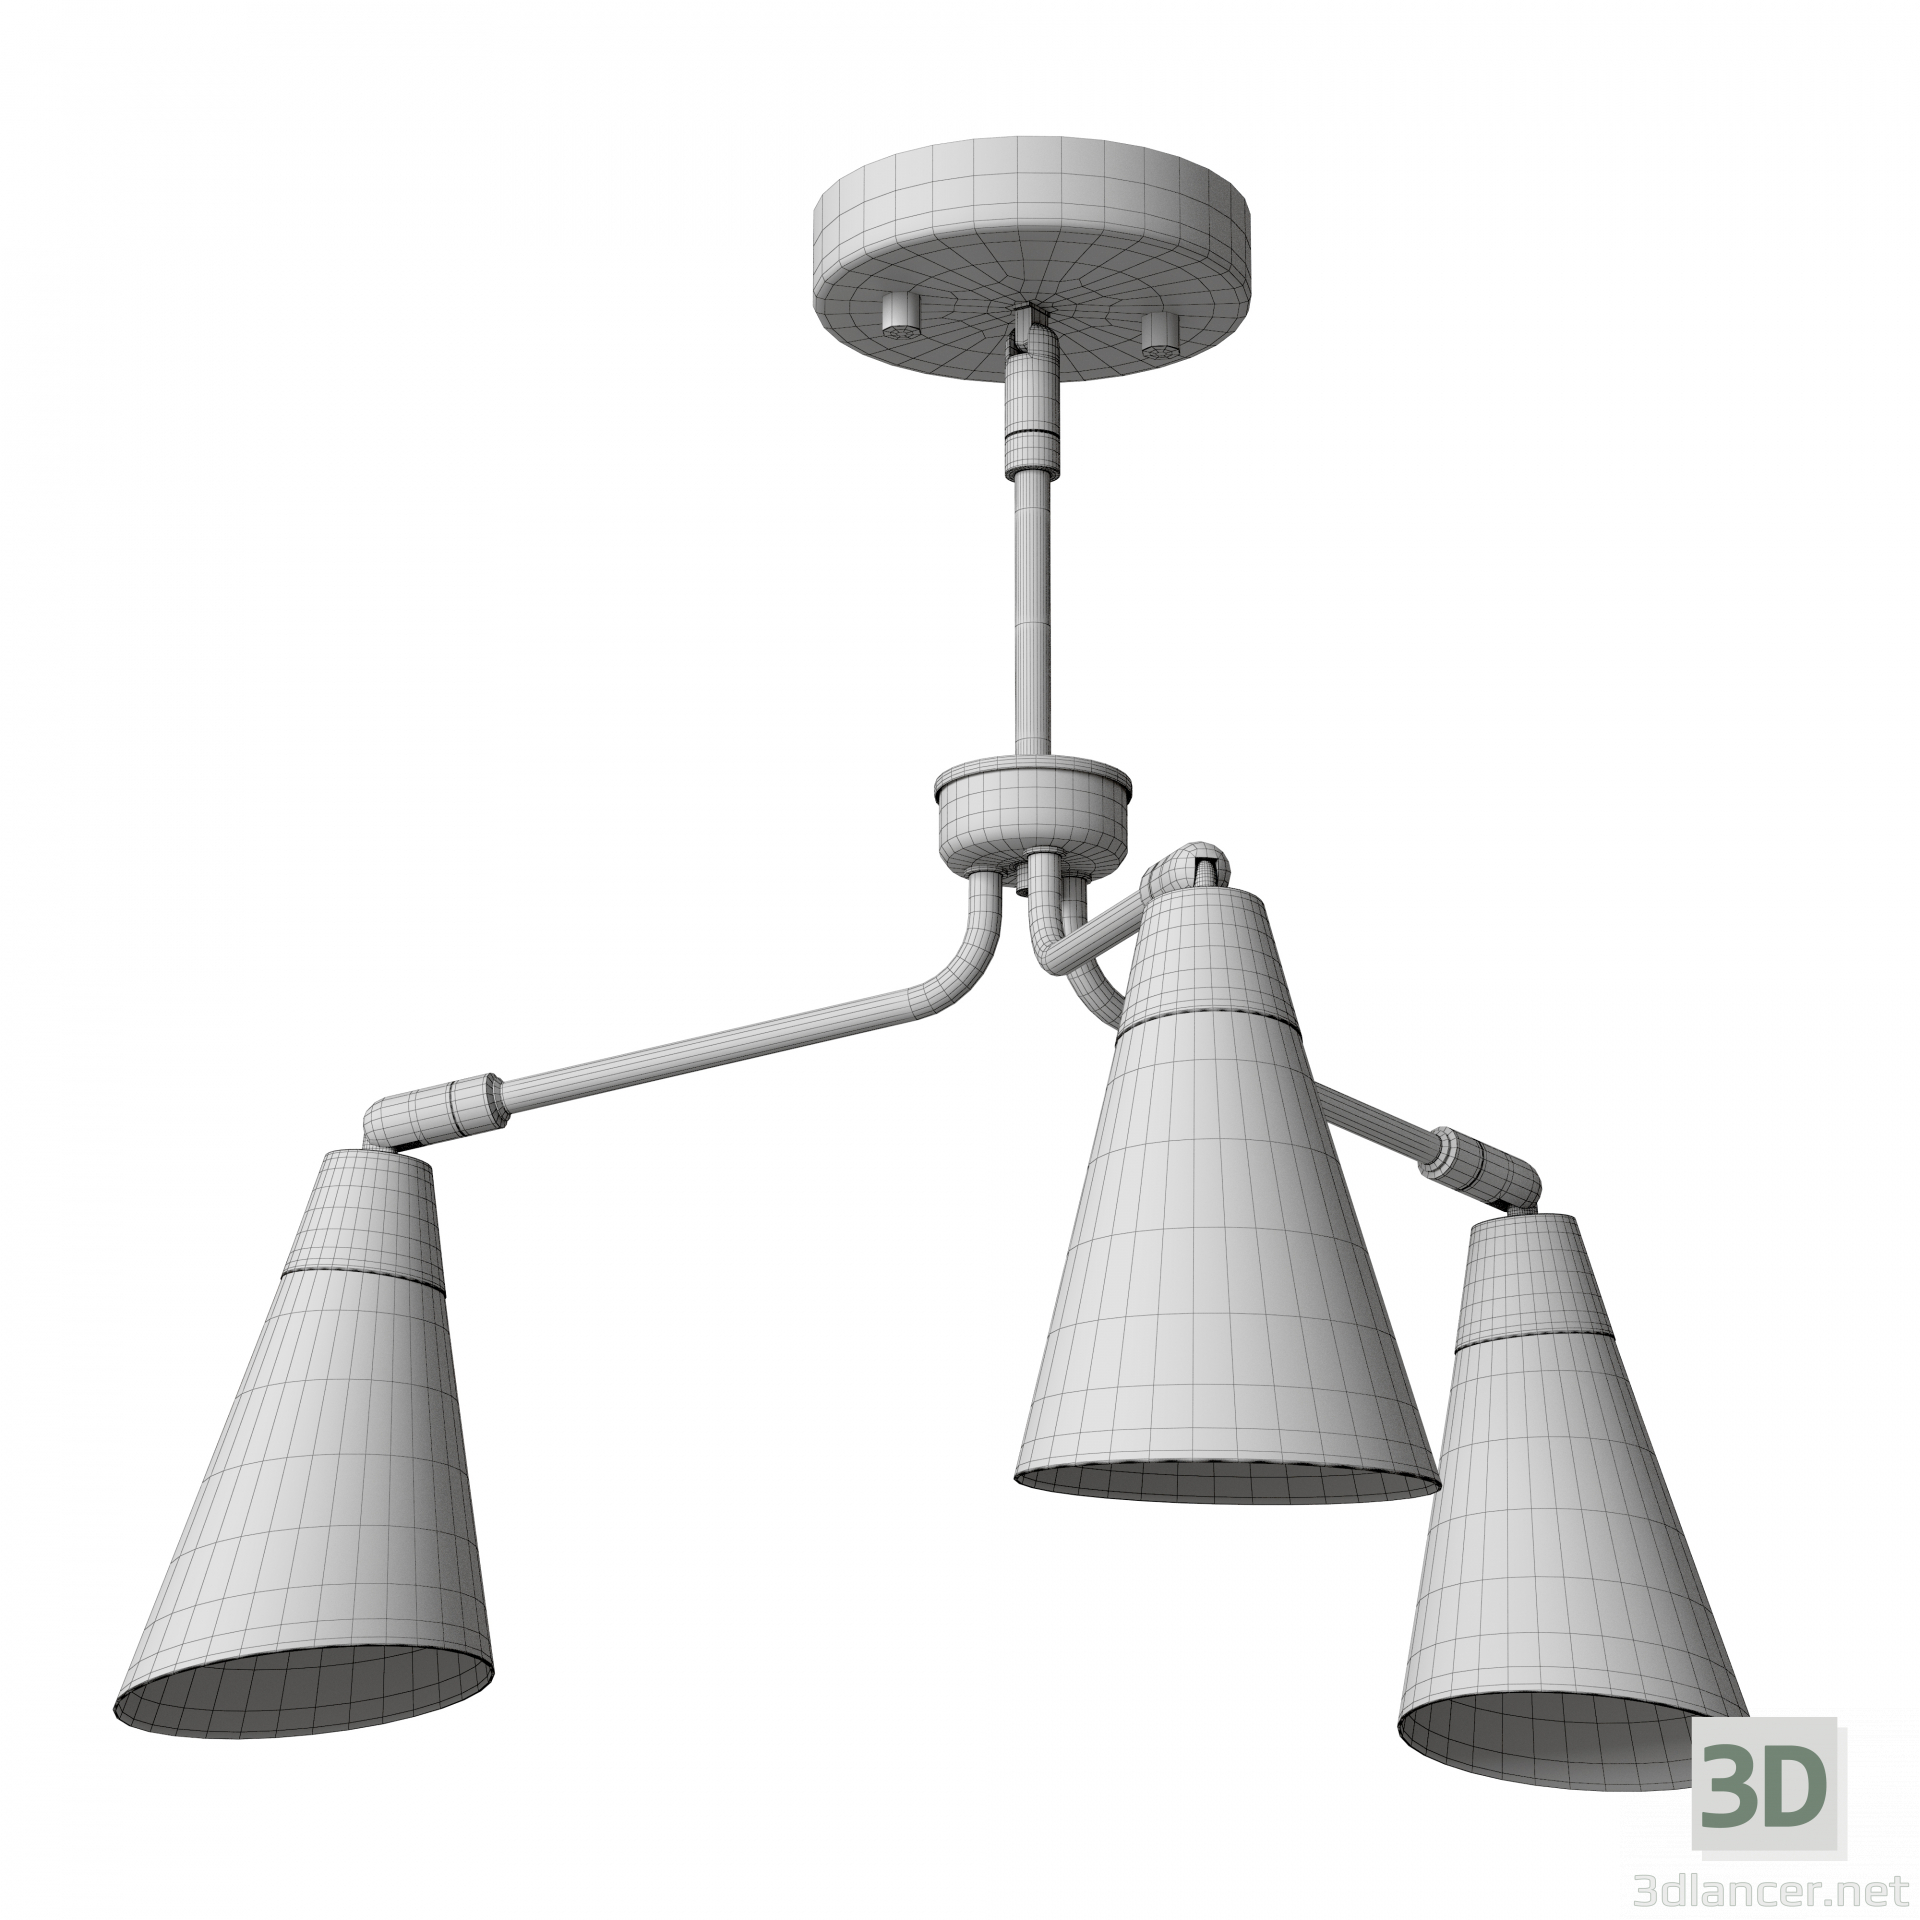 luz dalisia 3D modelo Compro - render